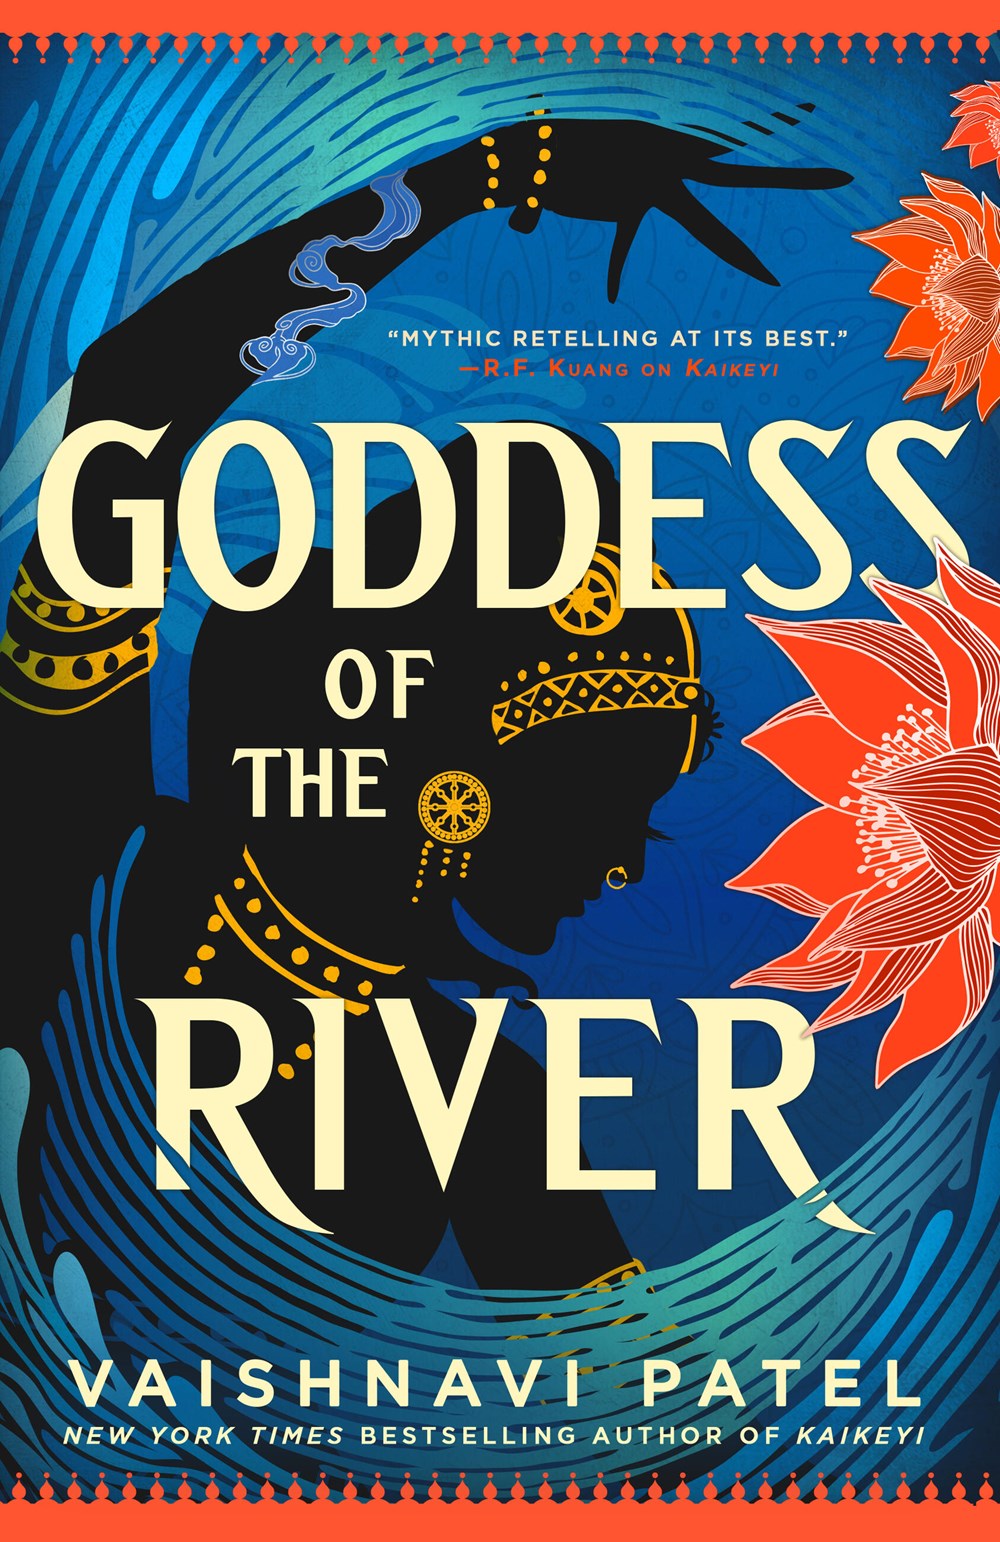 Goddess of the River by Vaishnavi Patel (Hardcover) (PREORDER)